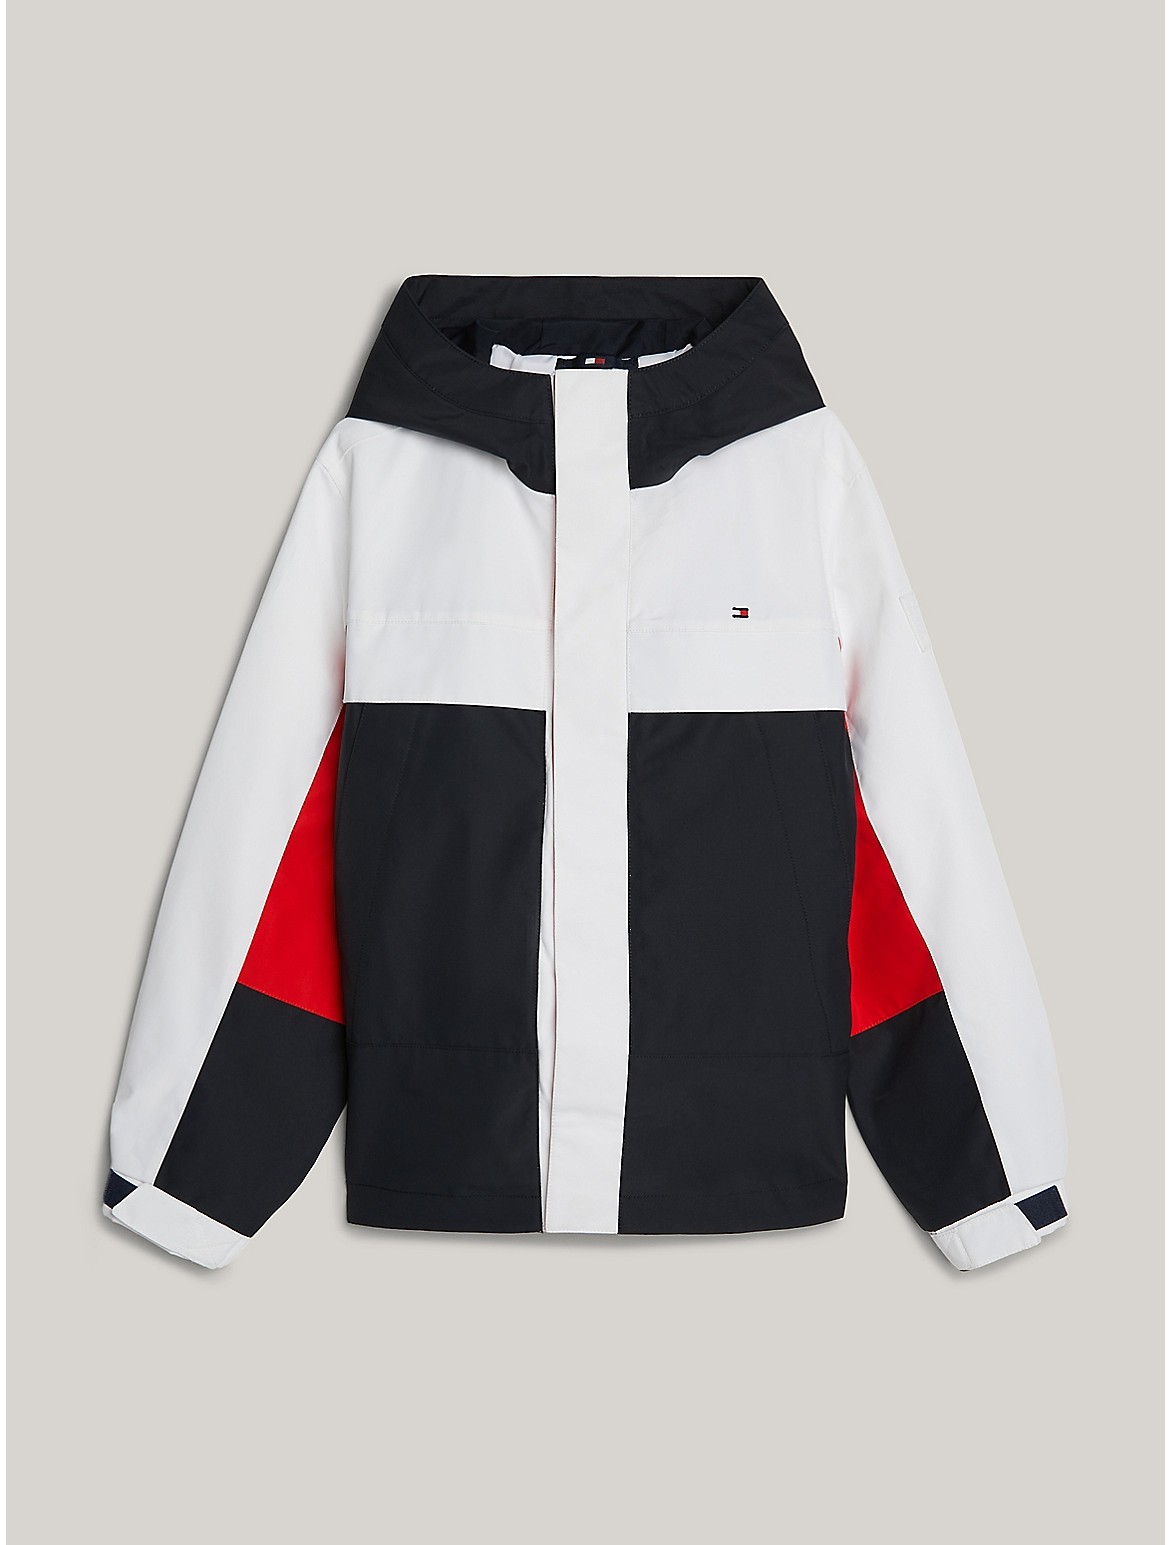 Tommy Hilfiger Boys' Kids' Colorblock Hooded Jacket